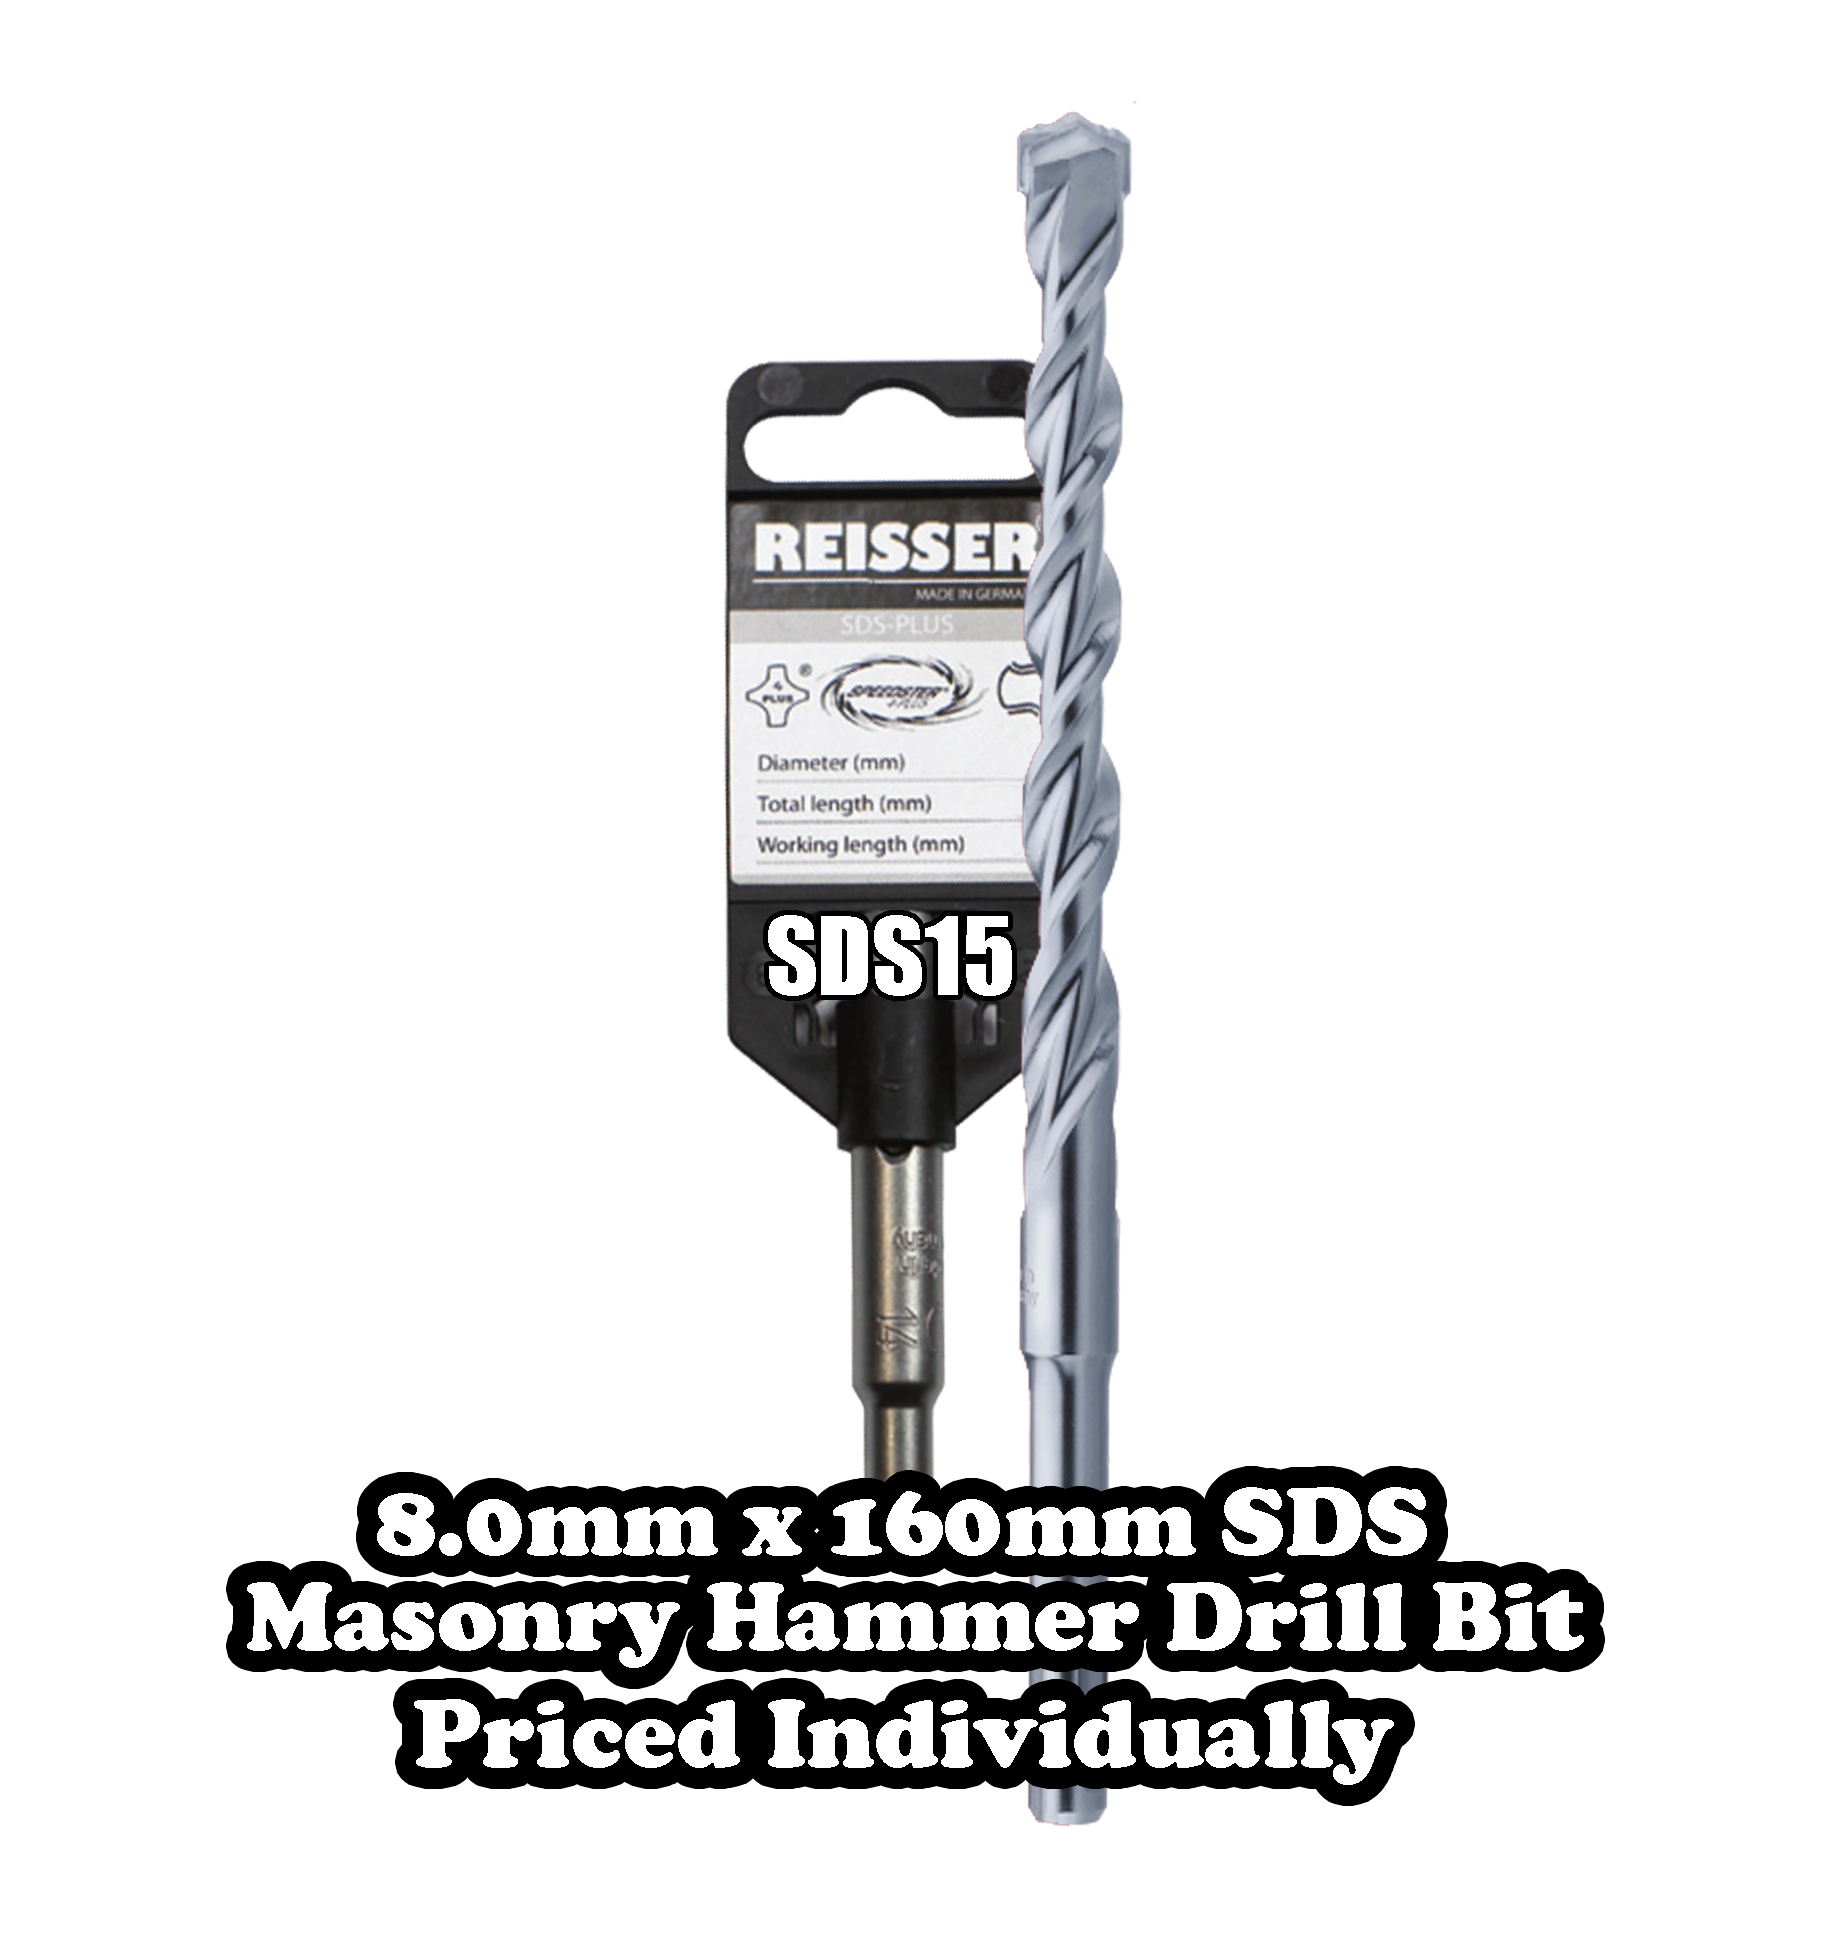 8.0mm x 160mm SDS Masonry Hammer Drill Bit